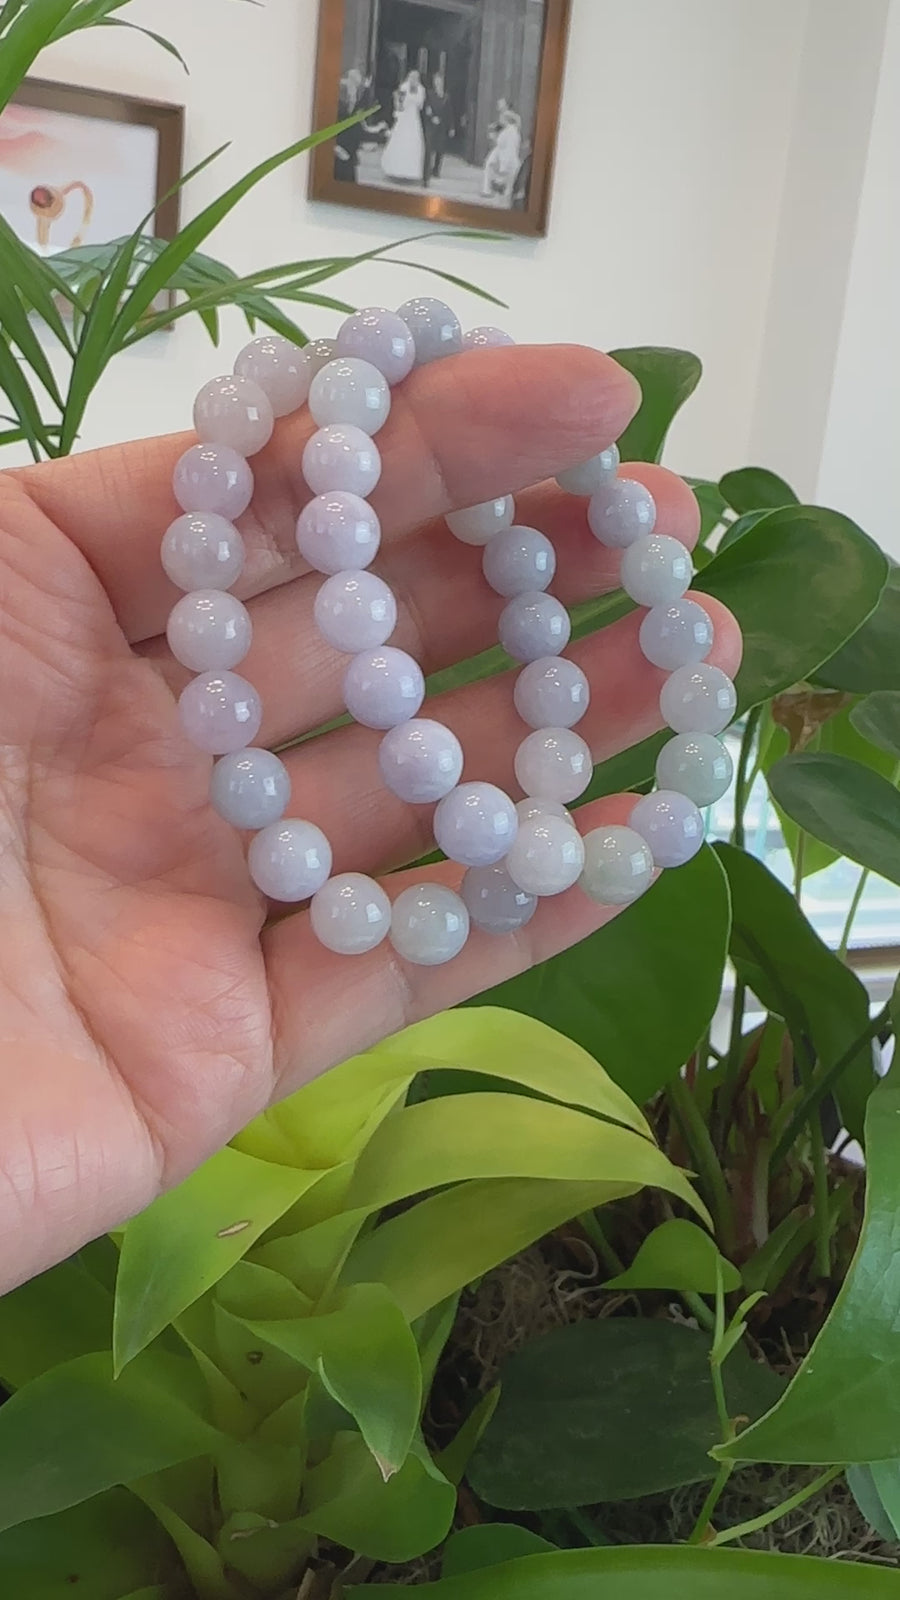 Natural Jadeite Jade Round Lavender Beads Bracelet ( 9.5 mm )